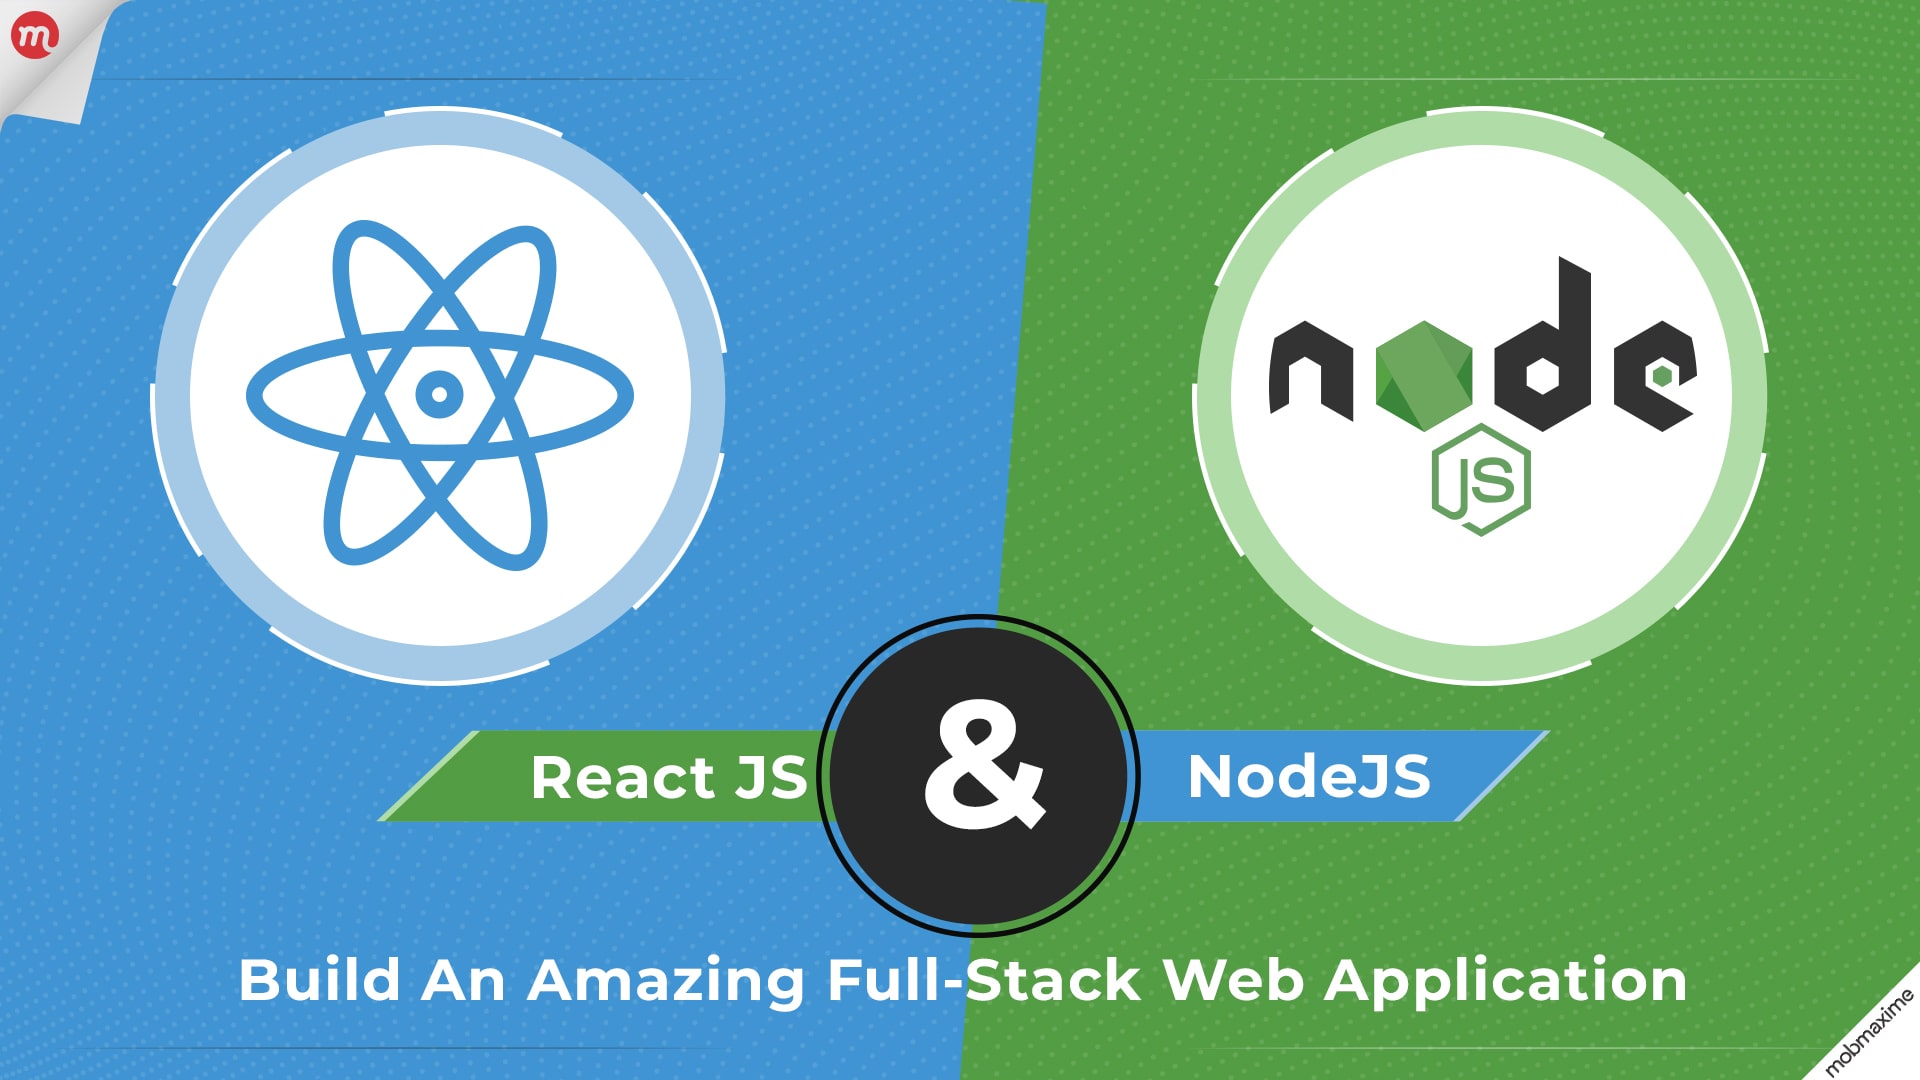 ReactJS and NodeJS: Build An Amazing Full-Stack Web Application